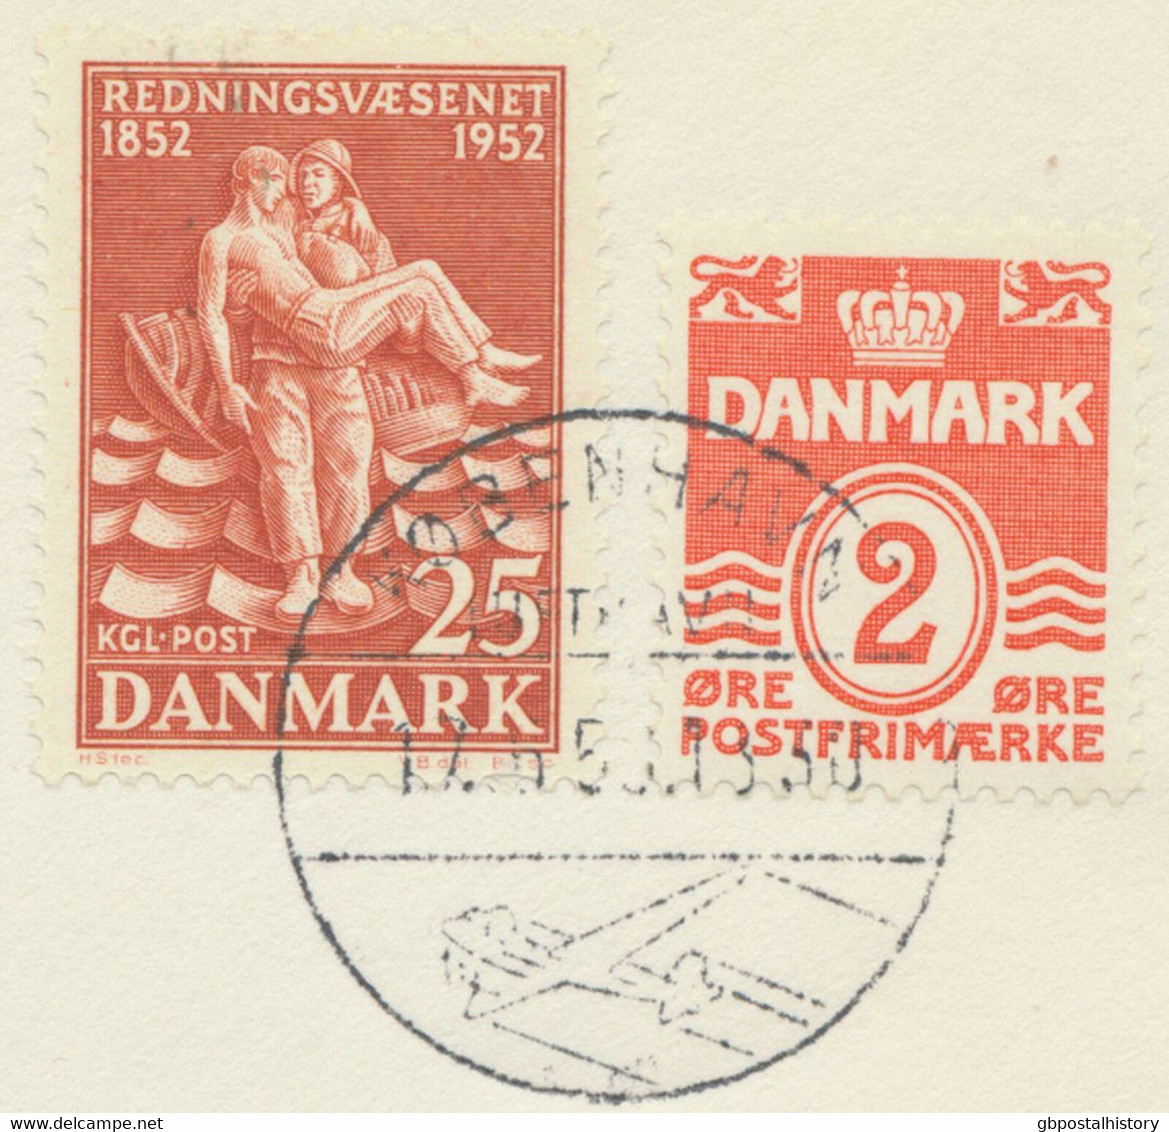 DENMARK 1959 First Flight SAS First Caravelle Jet Flight COPENHAGEN - DÜSSELDORF - Luftpost